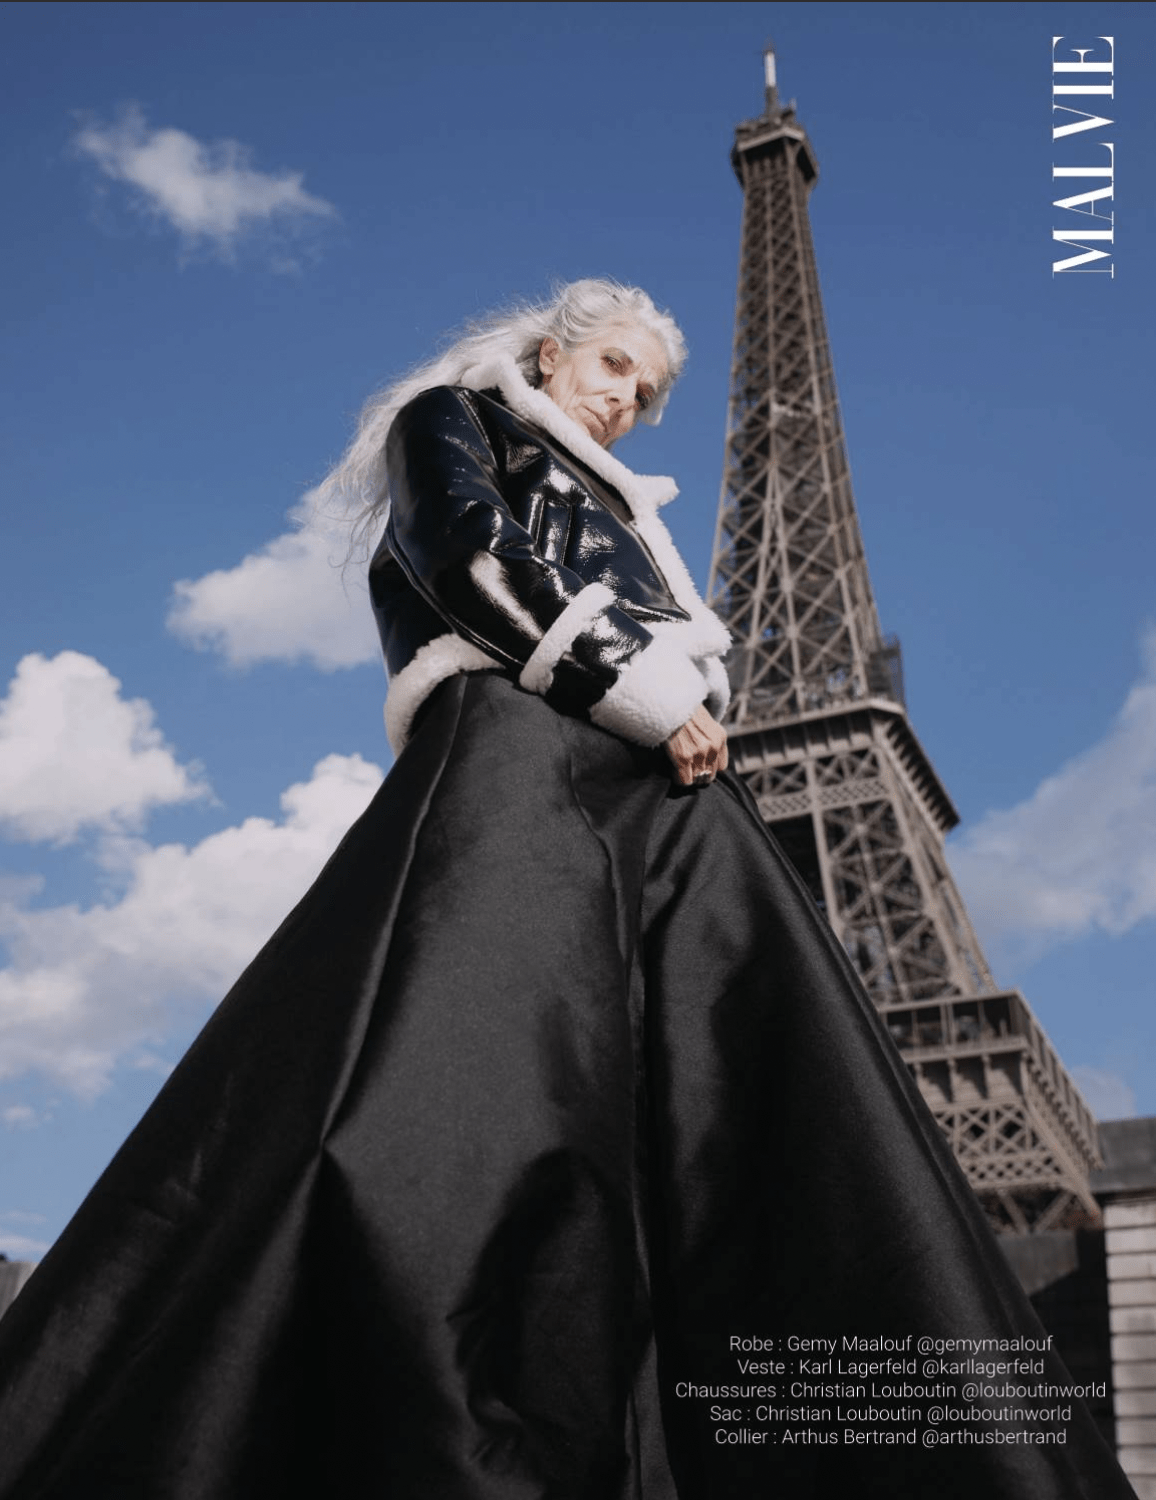 HER NOW HERE Caroline Bleux Photographe Paris editorial magazine